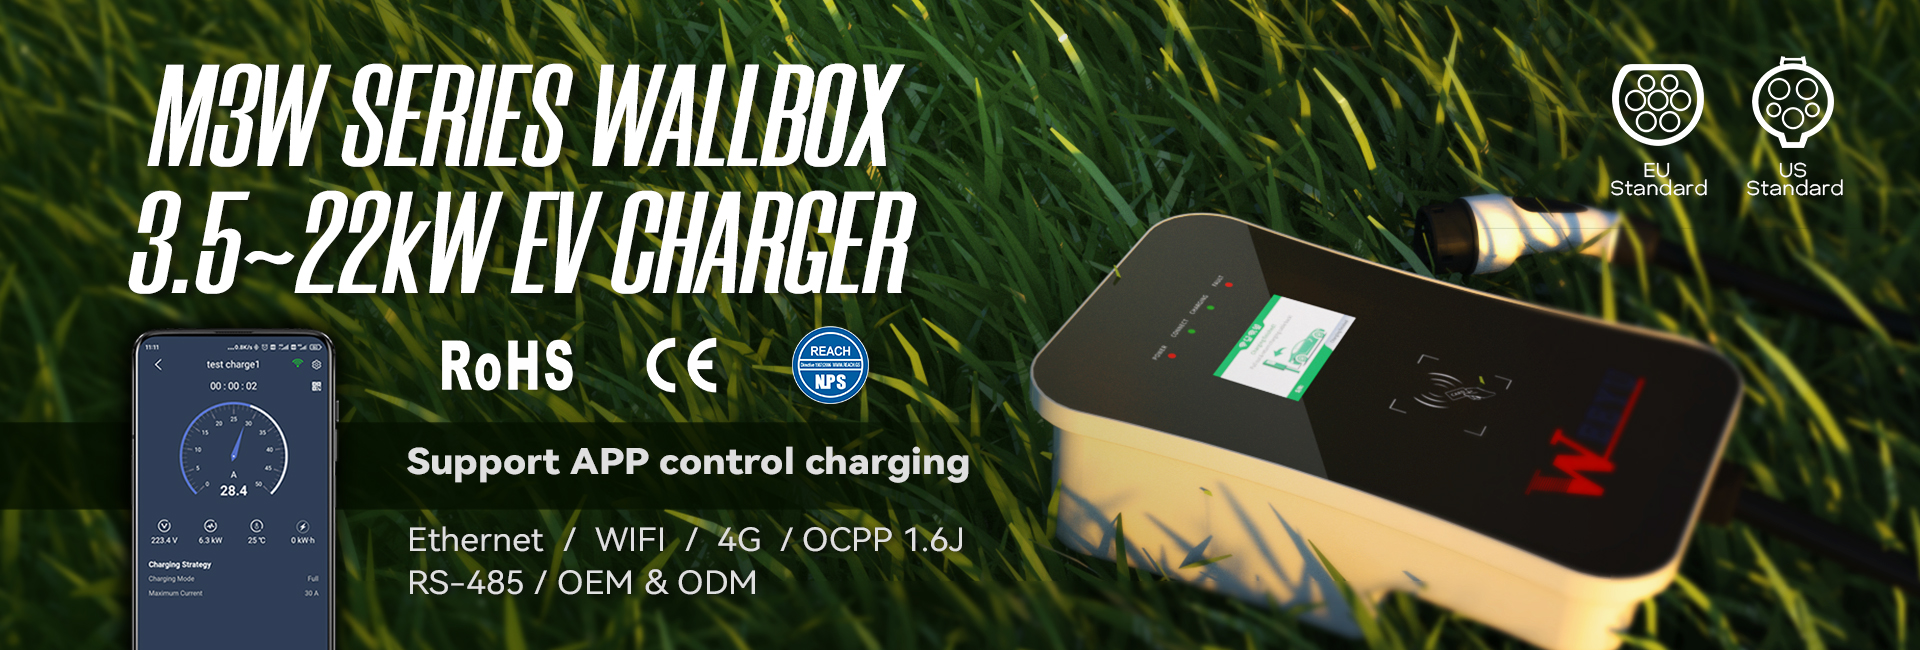 Banner-M3W EV charger wallbox -小